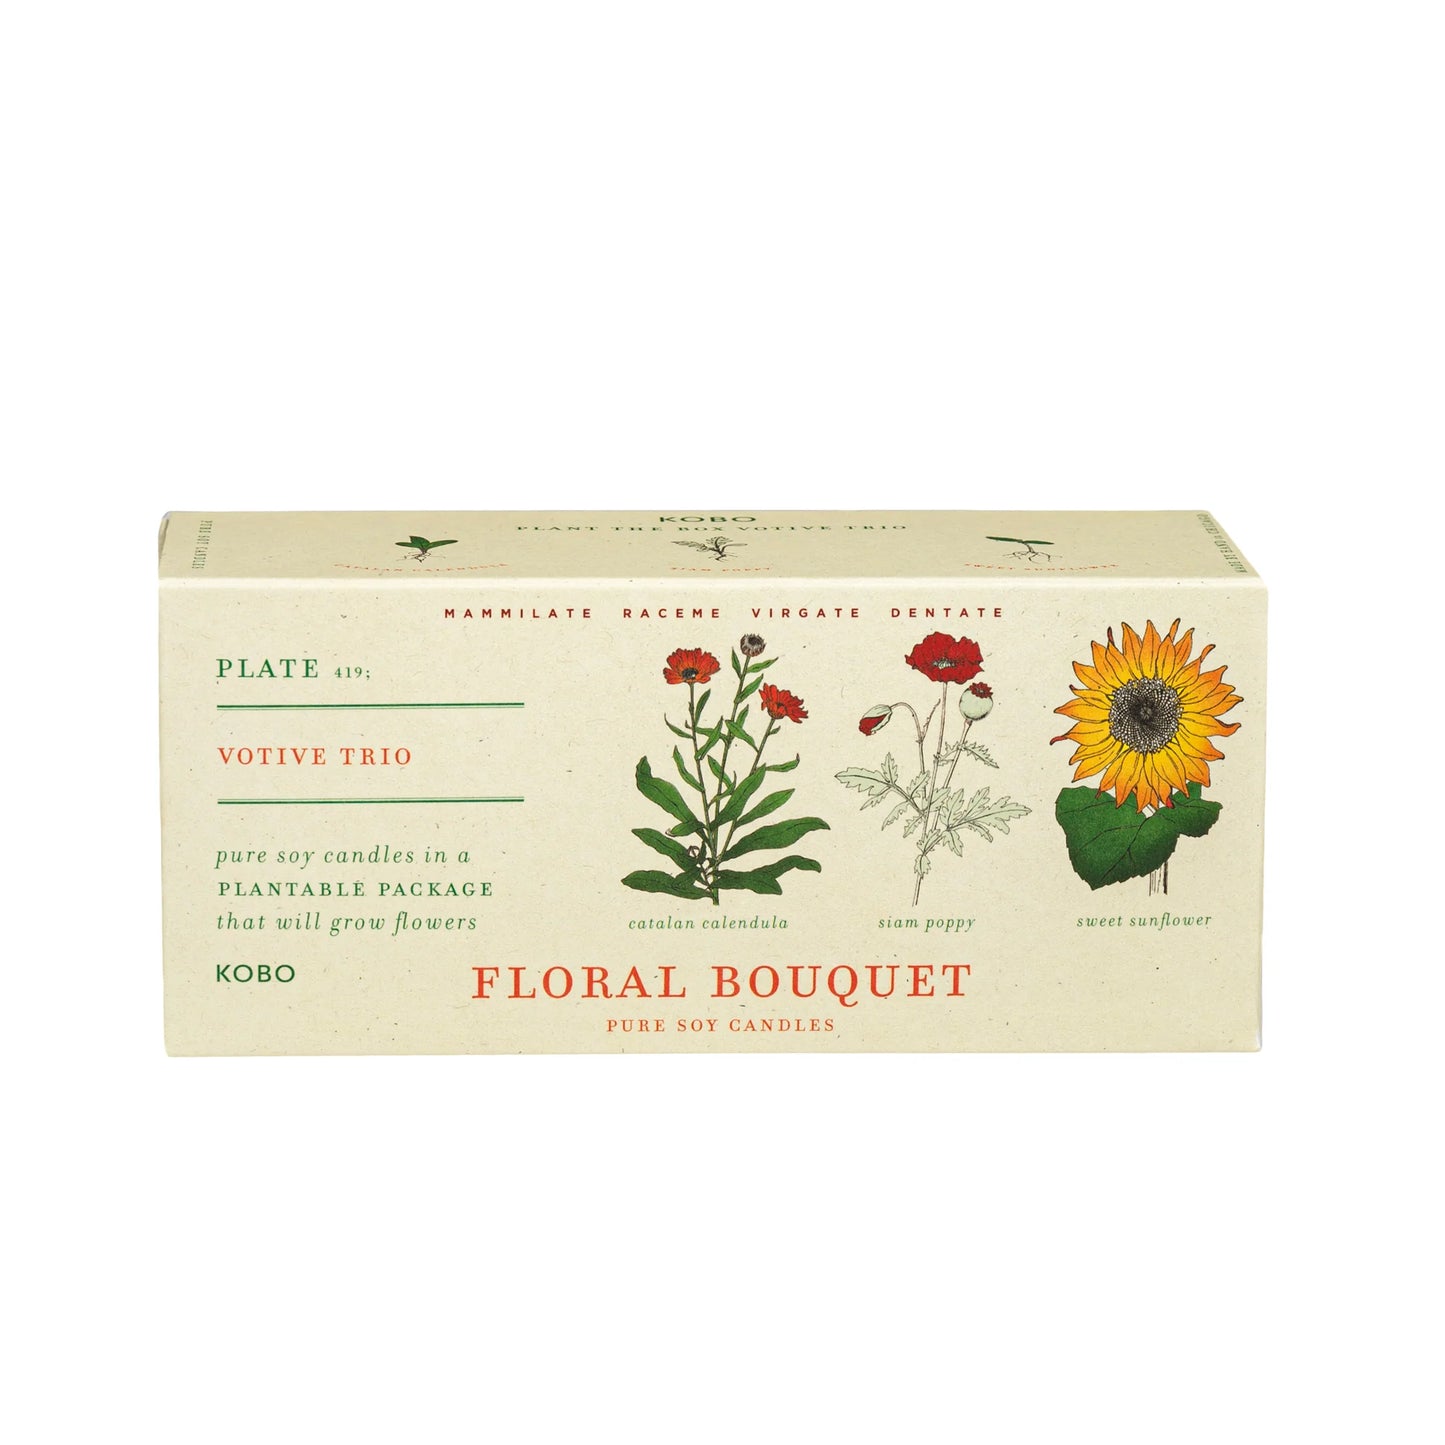 Floral Bouquet Trio 2.3oz Plant the Box Candles Catalan Calendula, Siam Poppy, Sweet Sunflower